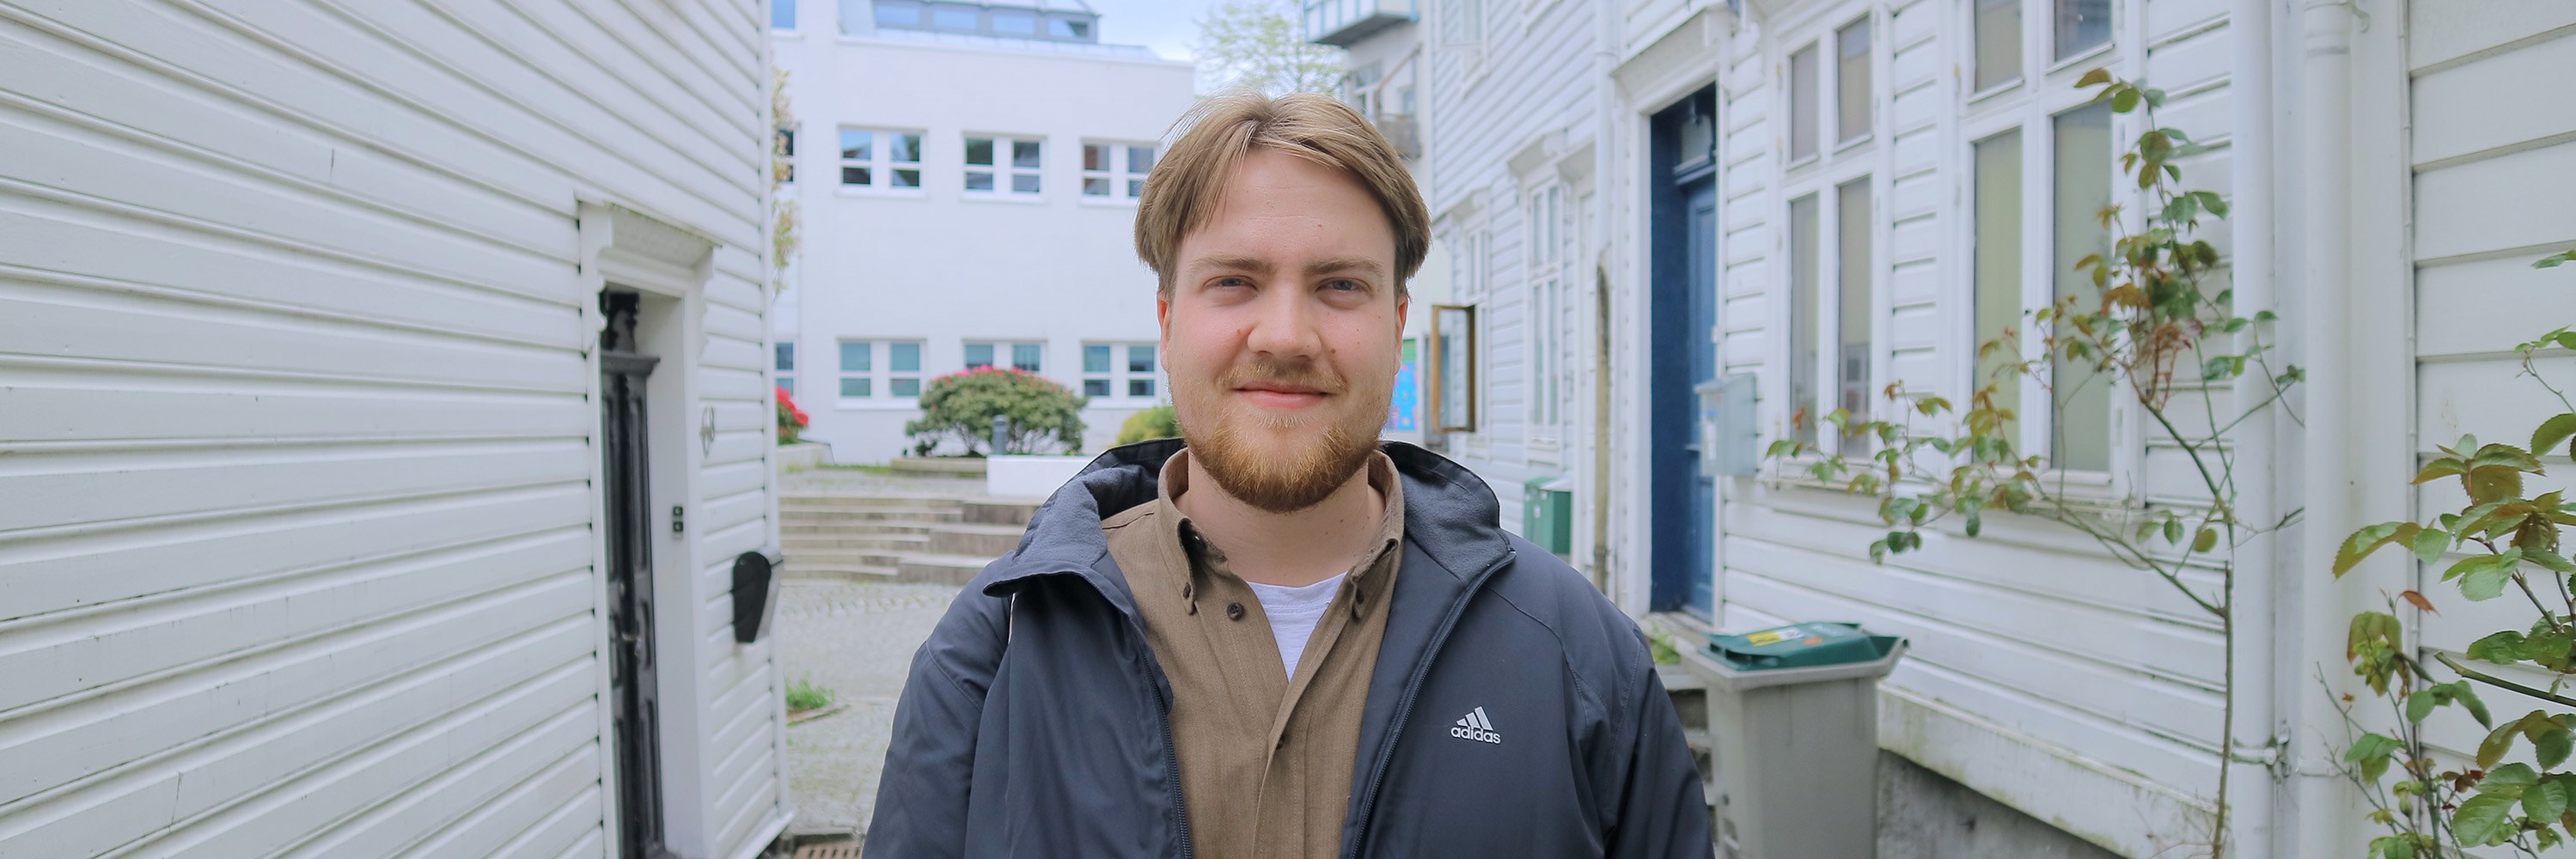 NHH-student Magnus Wethal. Foto: Ove Sjøstrøm